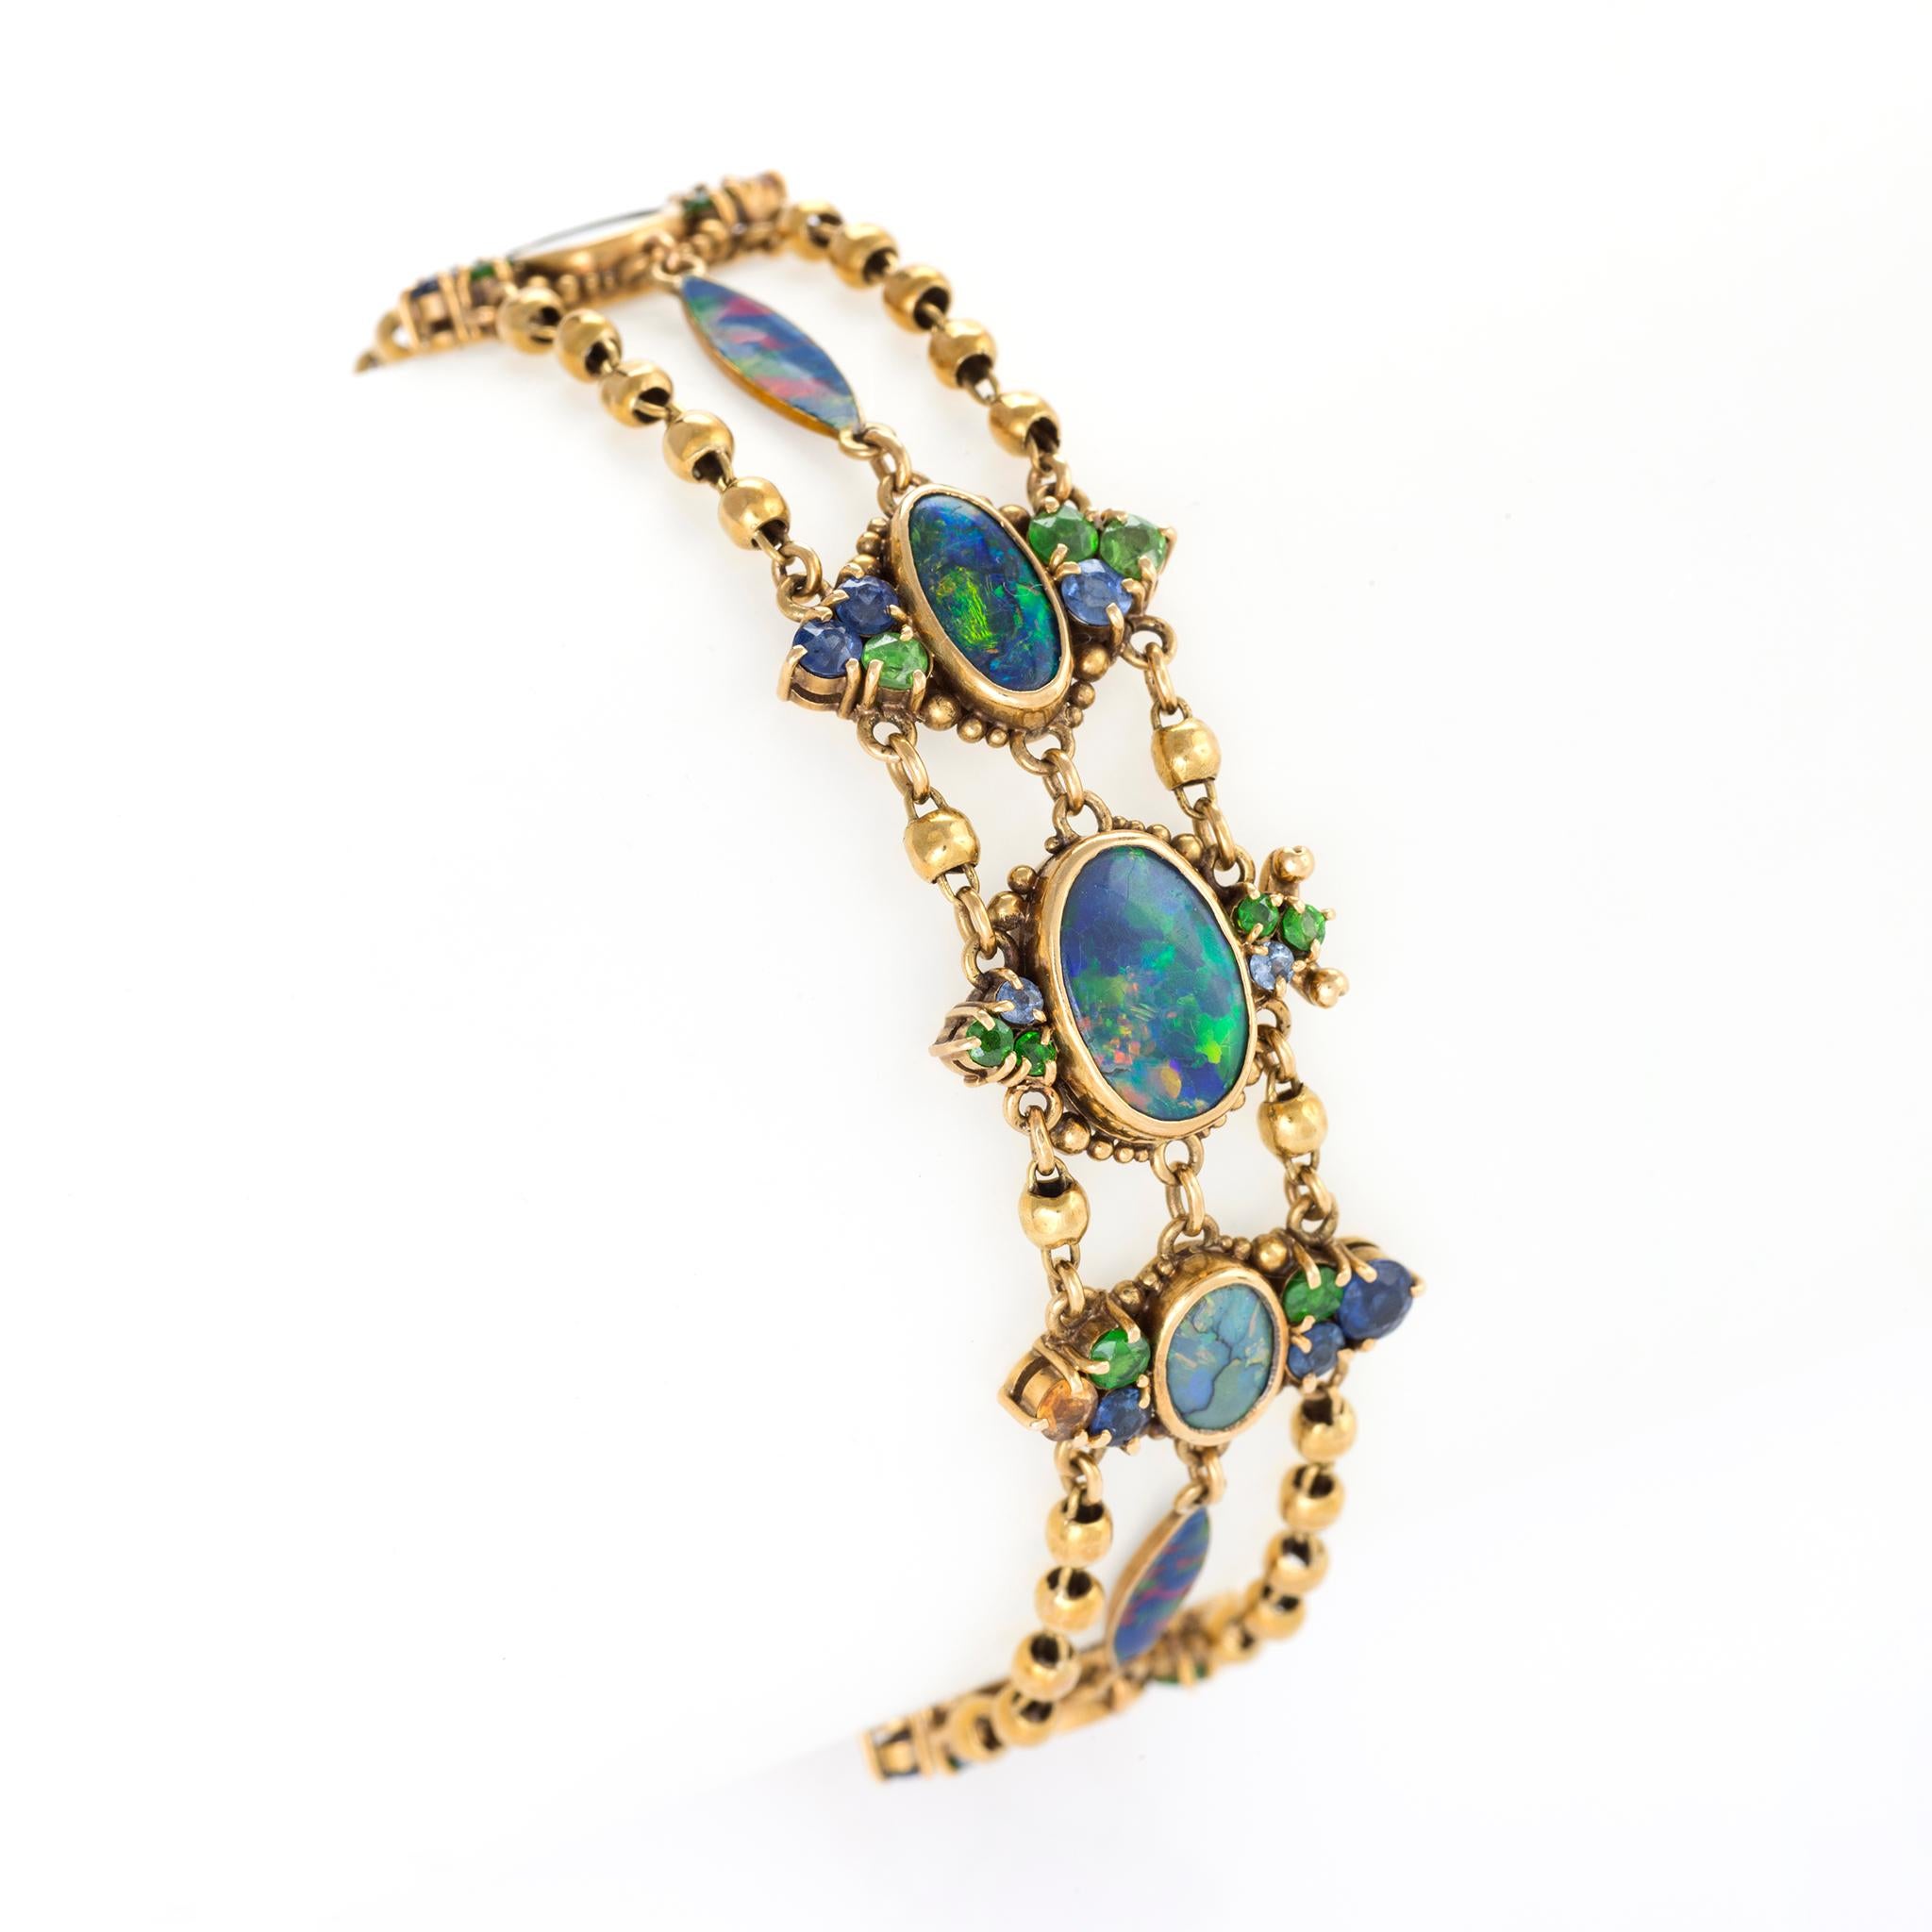 Women's Louis Comfort Tiffany Black Opal and Enamel Necklace and Bracelet Set